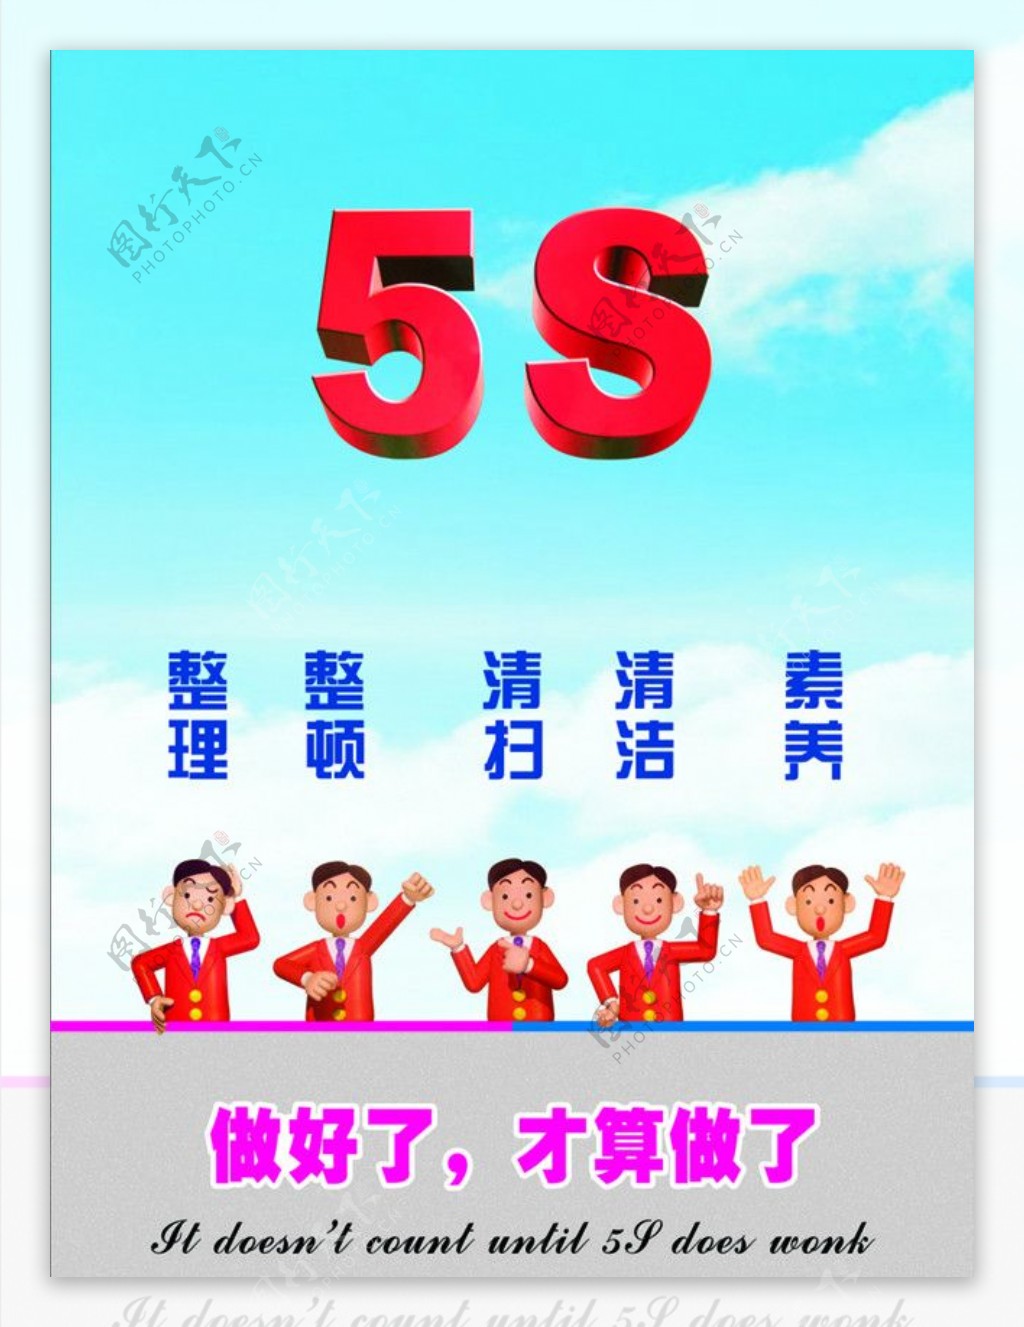 5s宣传海报图片